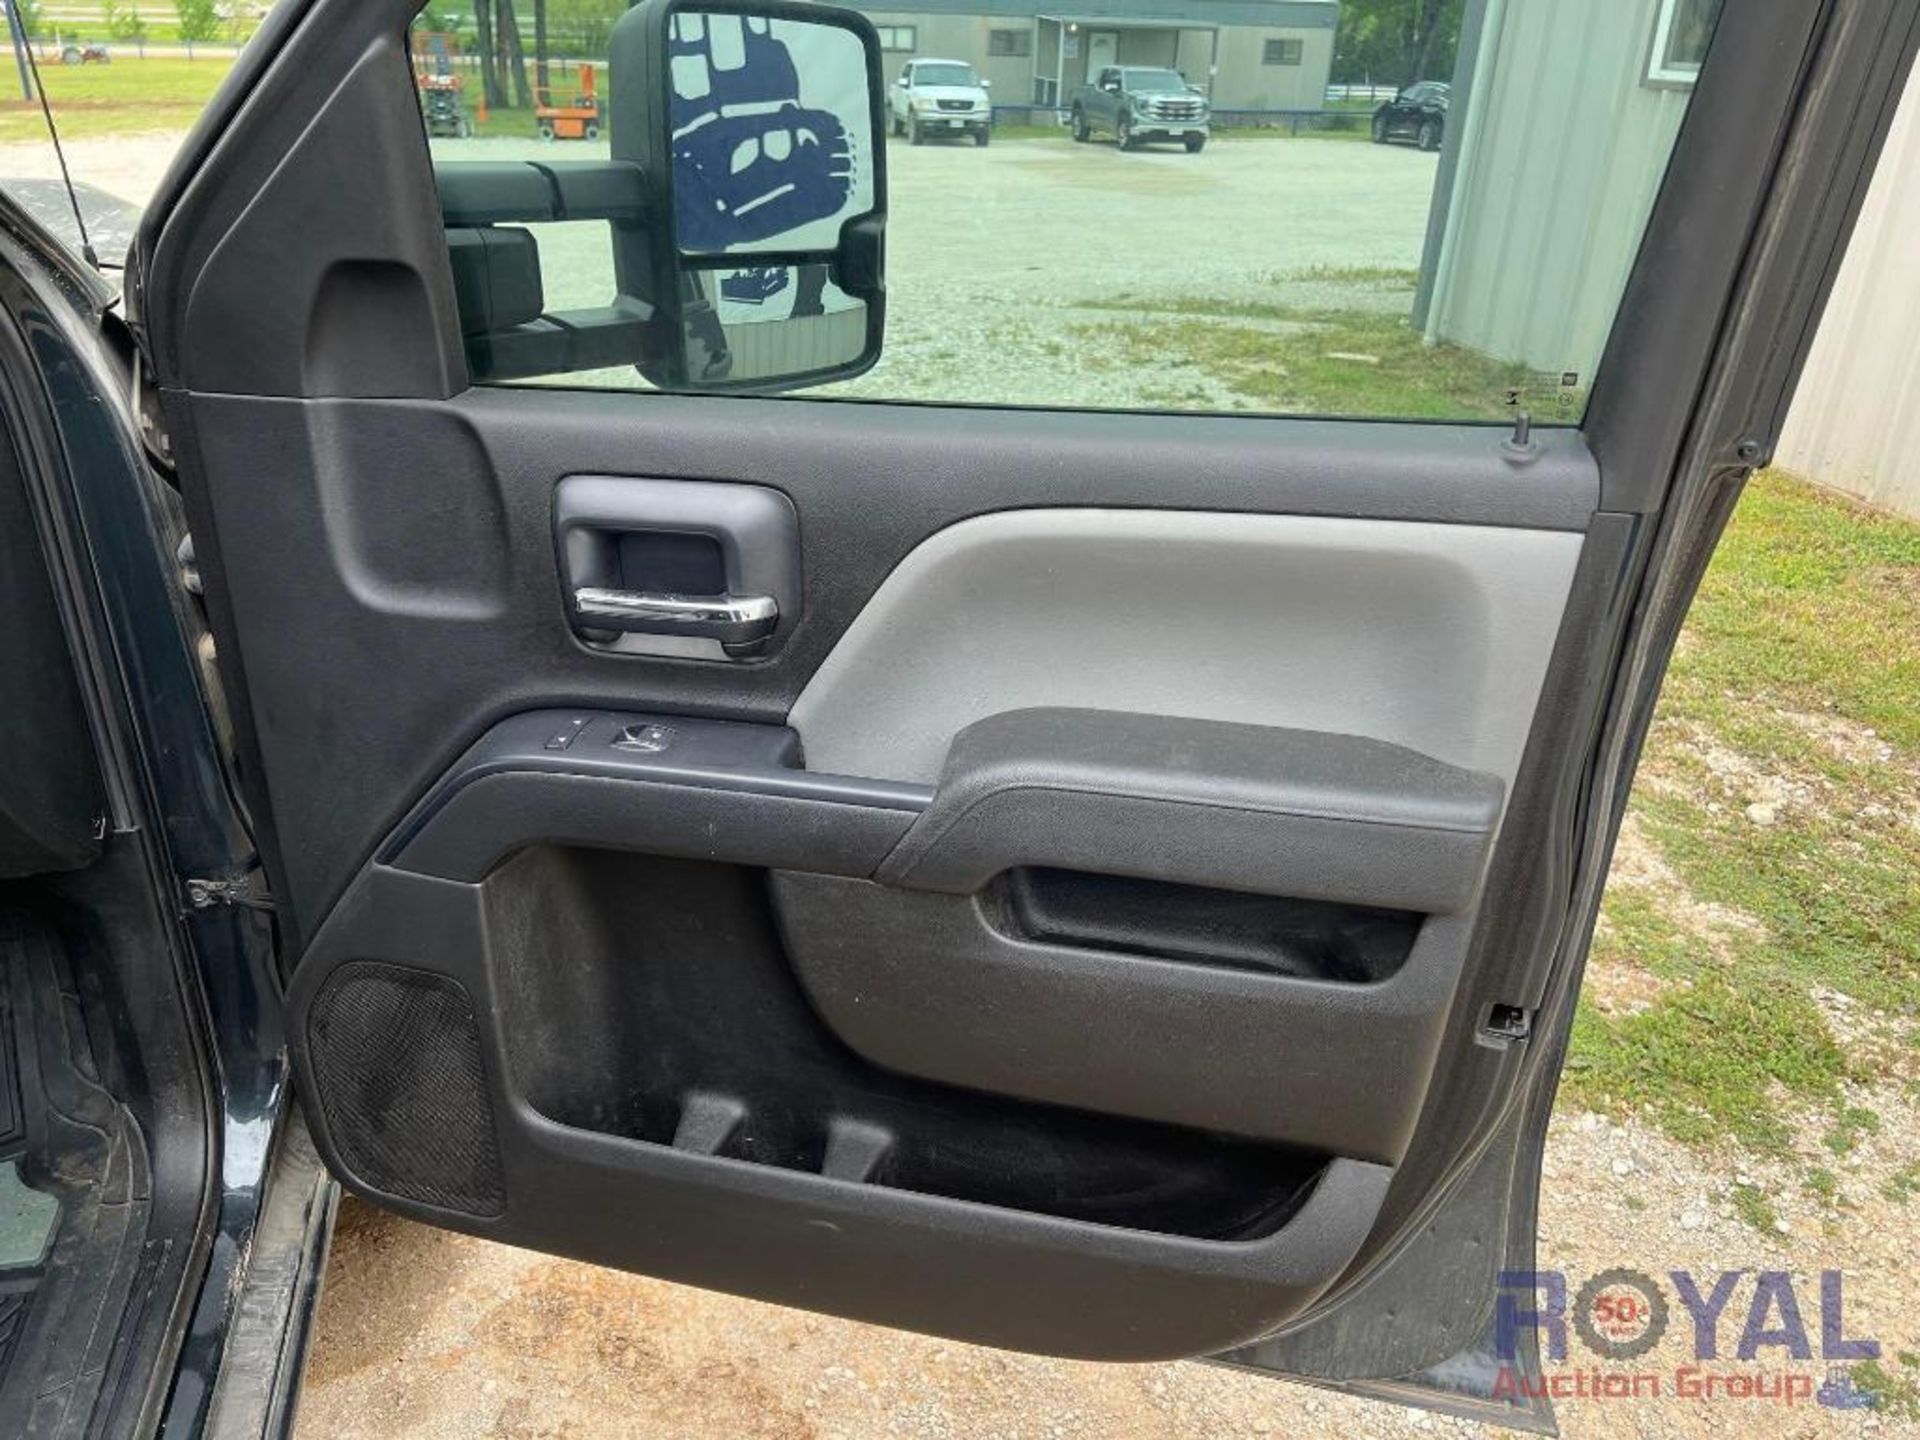 2018 Chevrolet Silverado 4x4 Crew Cab Pickup Truck - Image 39 of 51